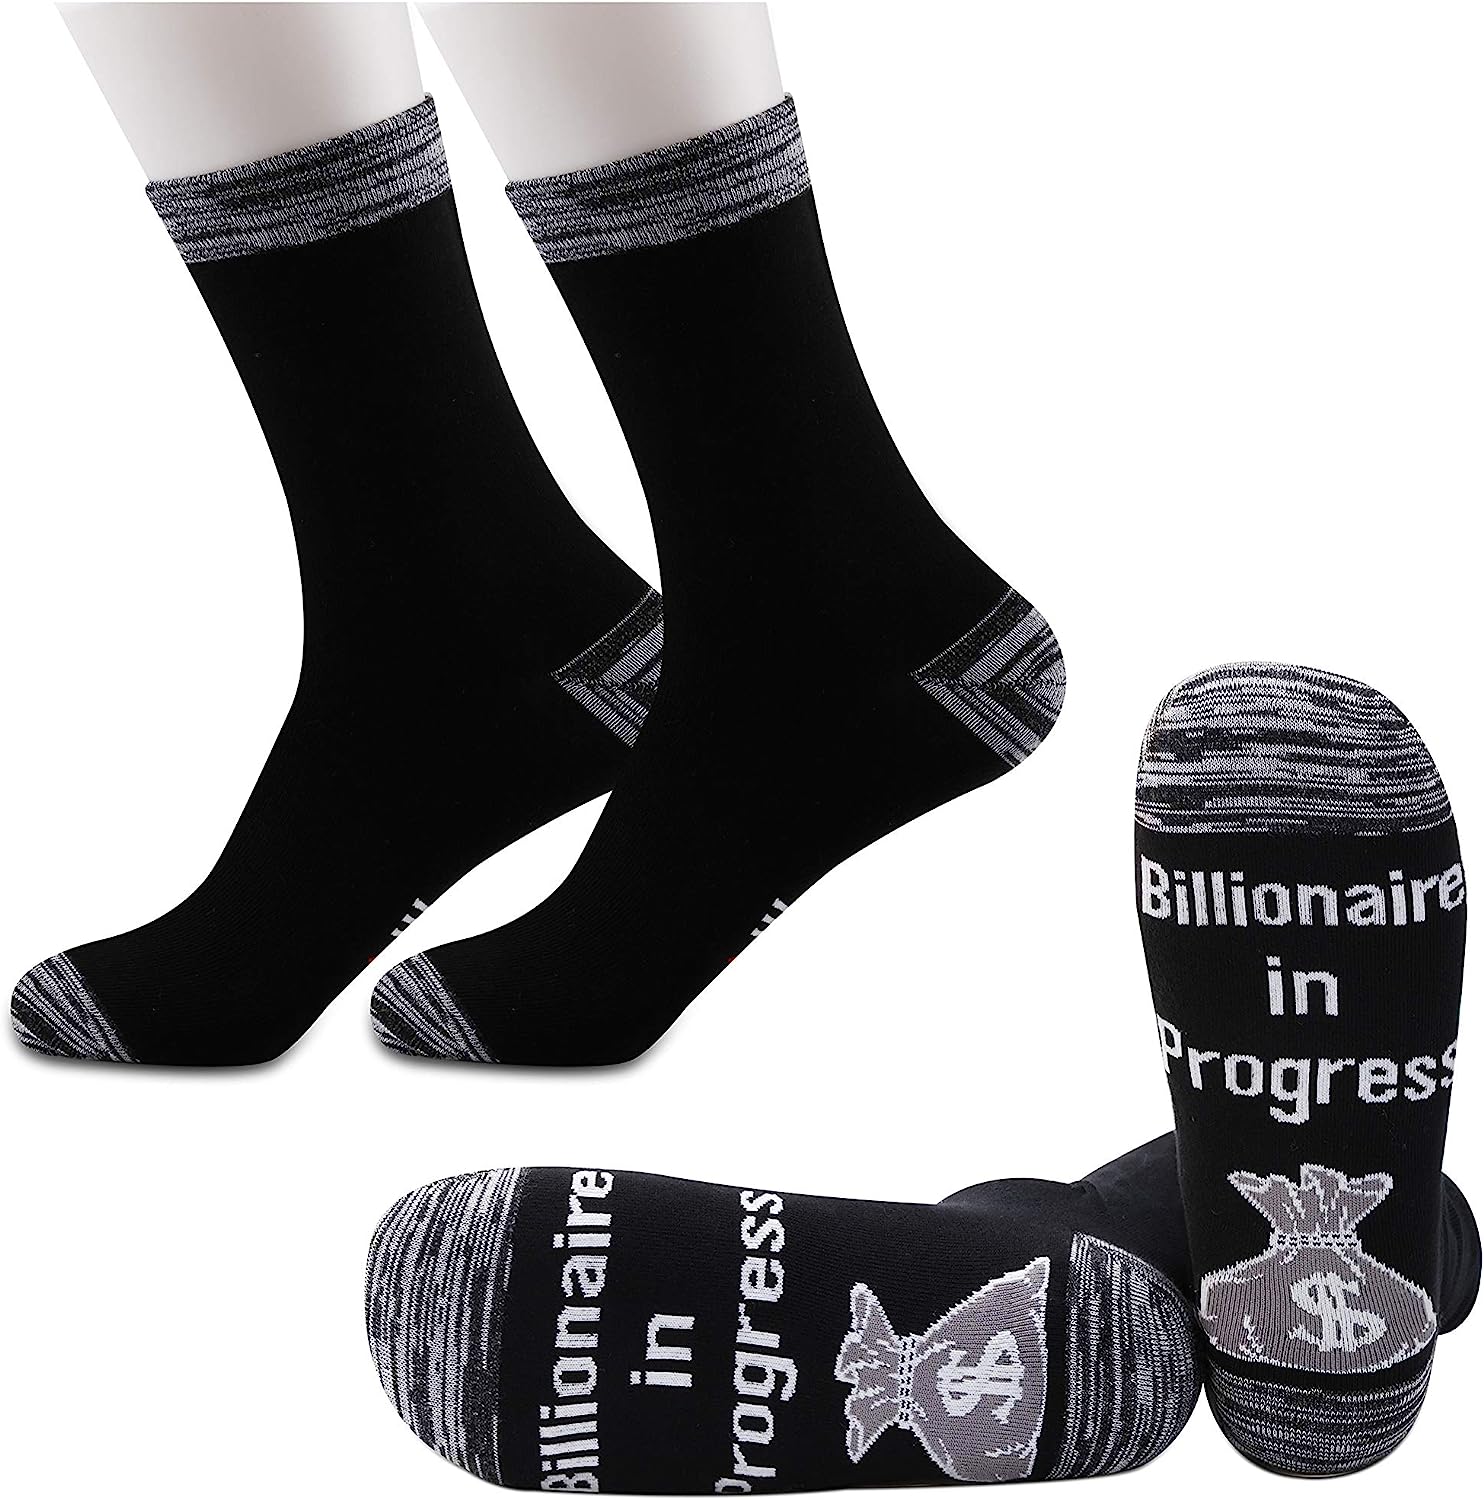 JXGZSO 2 Pairs Entrepreneur Socks Gift Future [...]